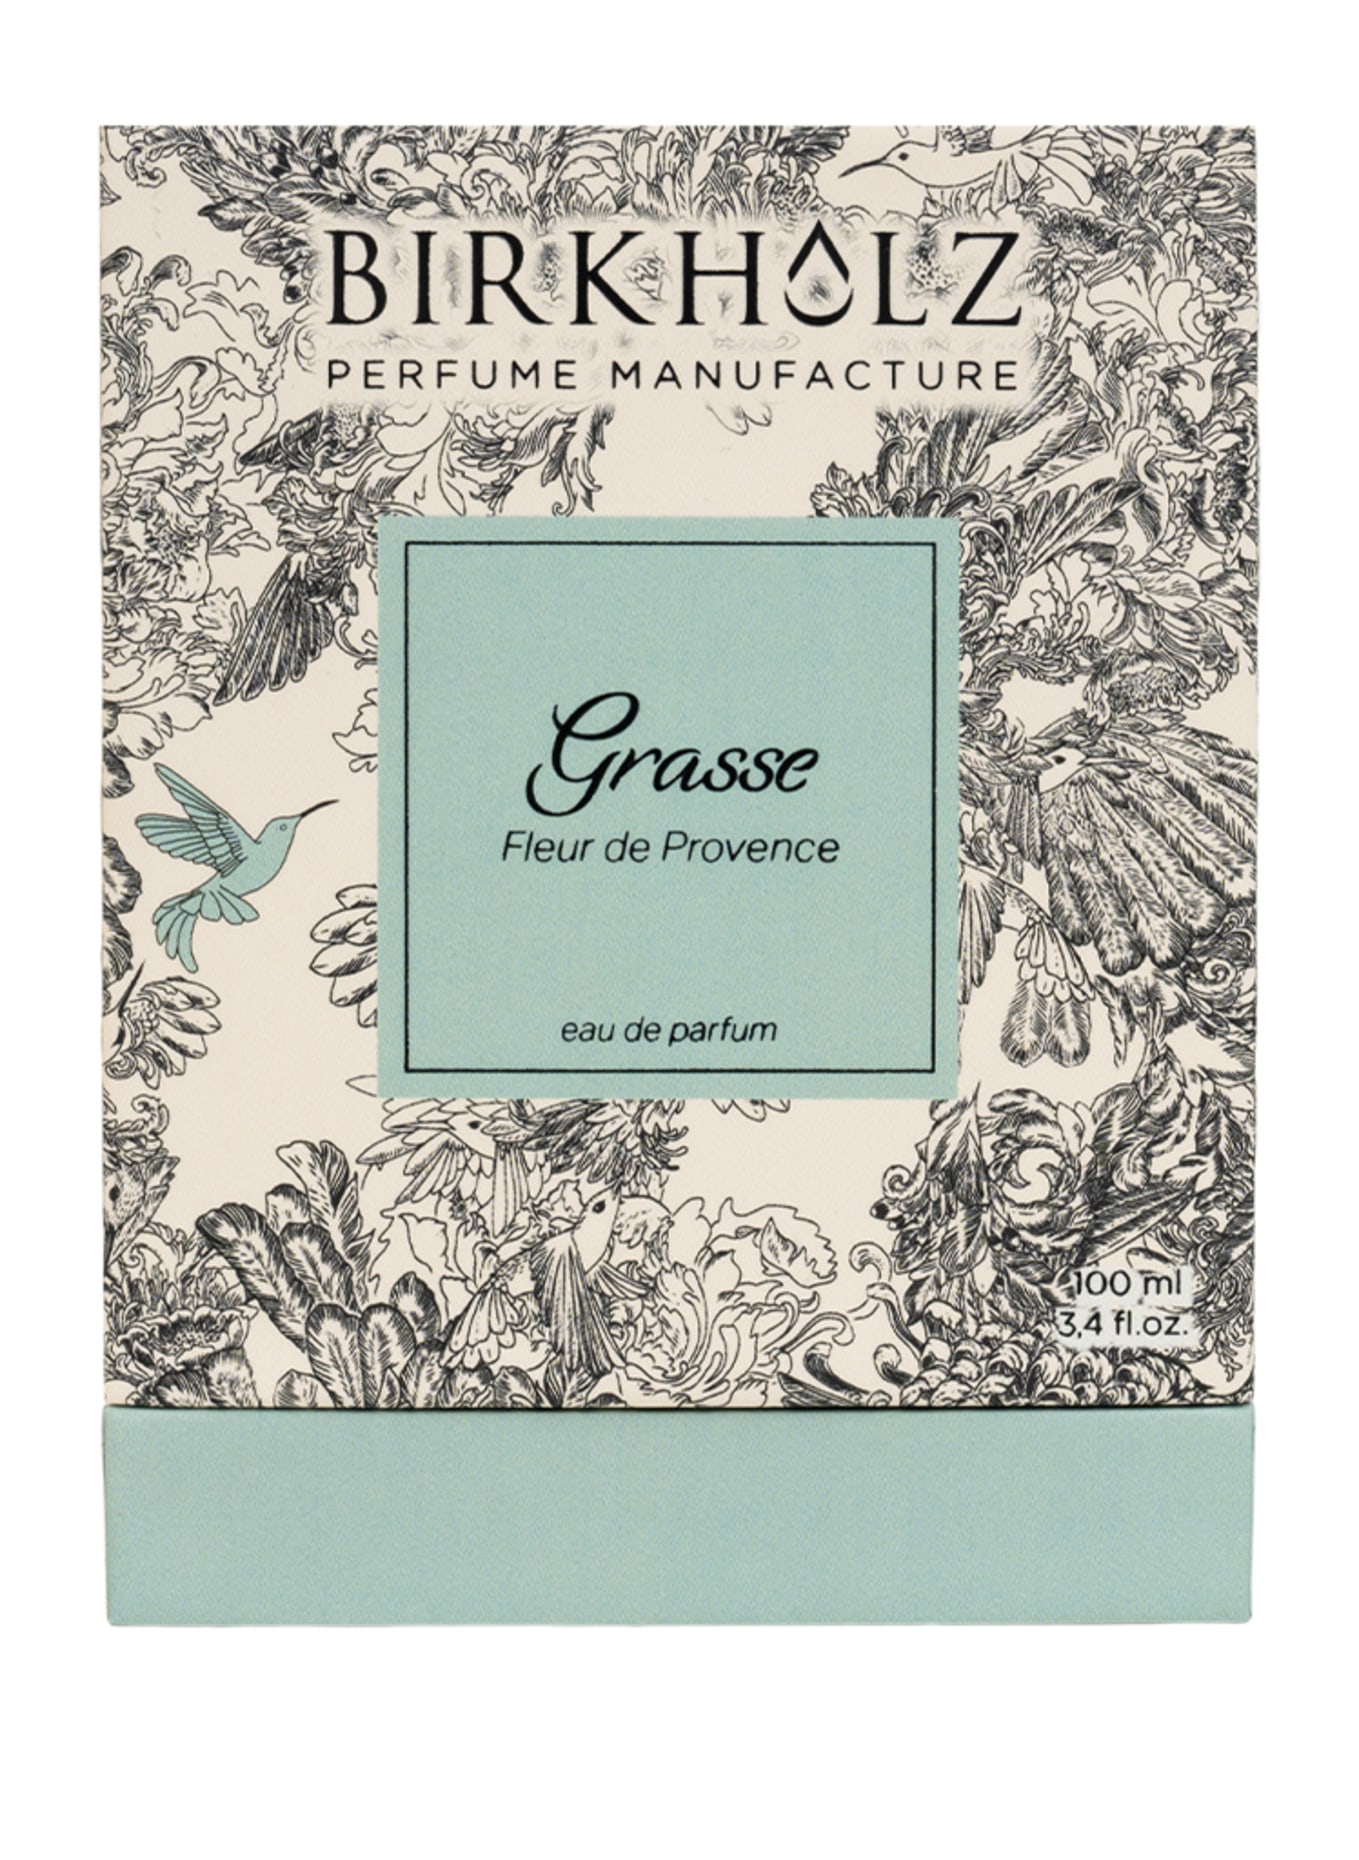 BIRKHOLZ GRASSE – FLEUR DE PROVENCE (Obrazek 2)